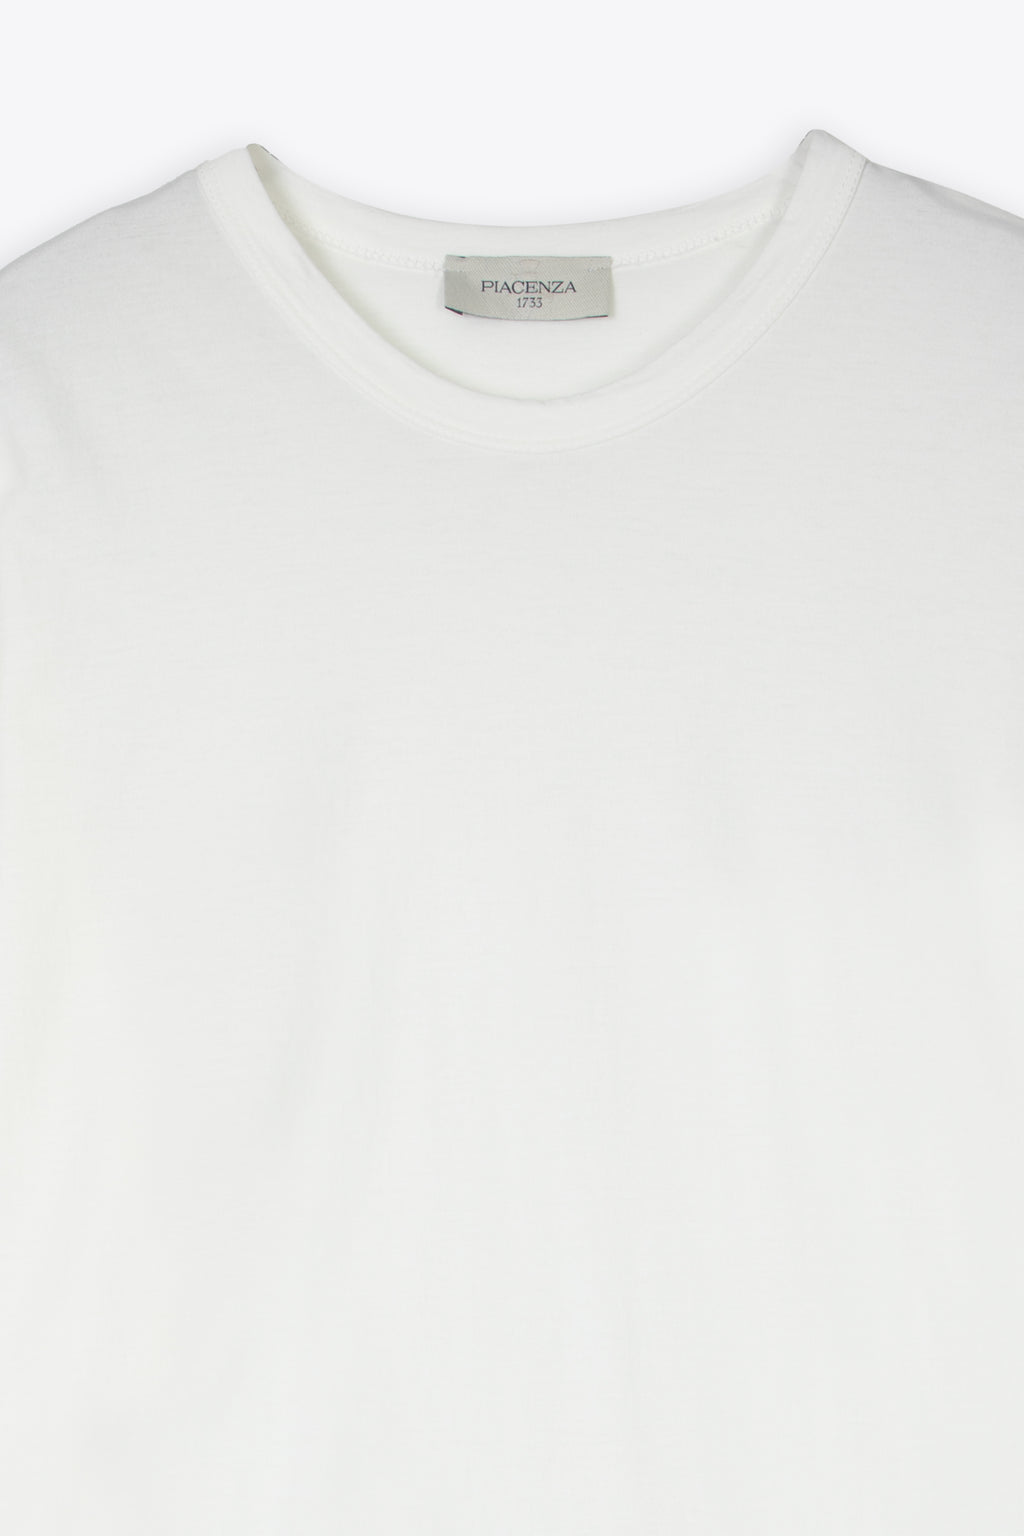 alt-image__White-lightweight-cotton-t-shirt